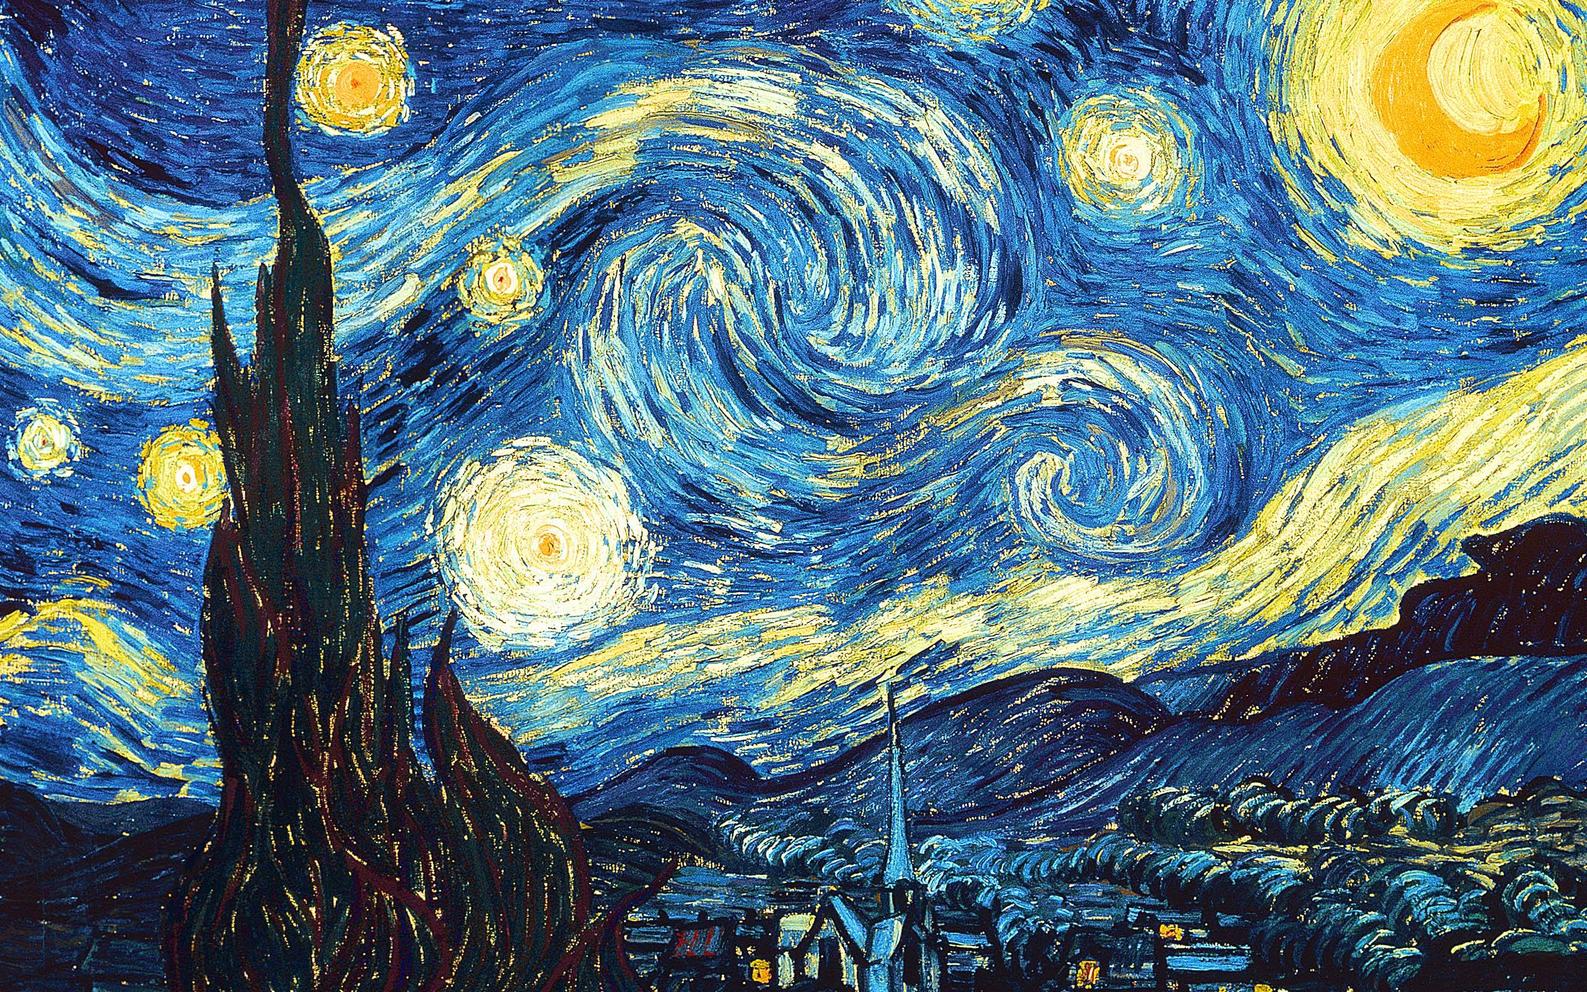 How To Make Von Gogh's 'Starry Night' Come Alive